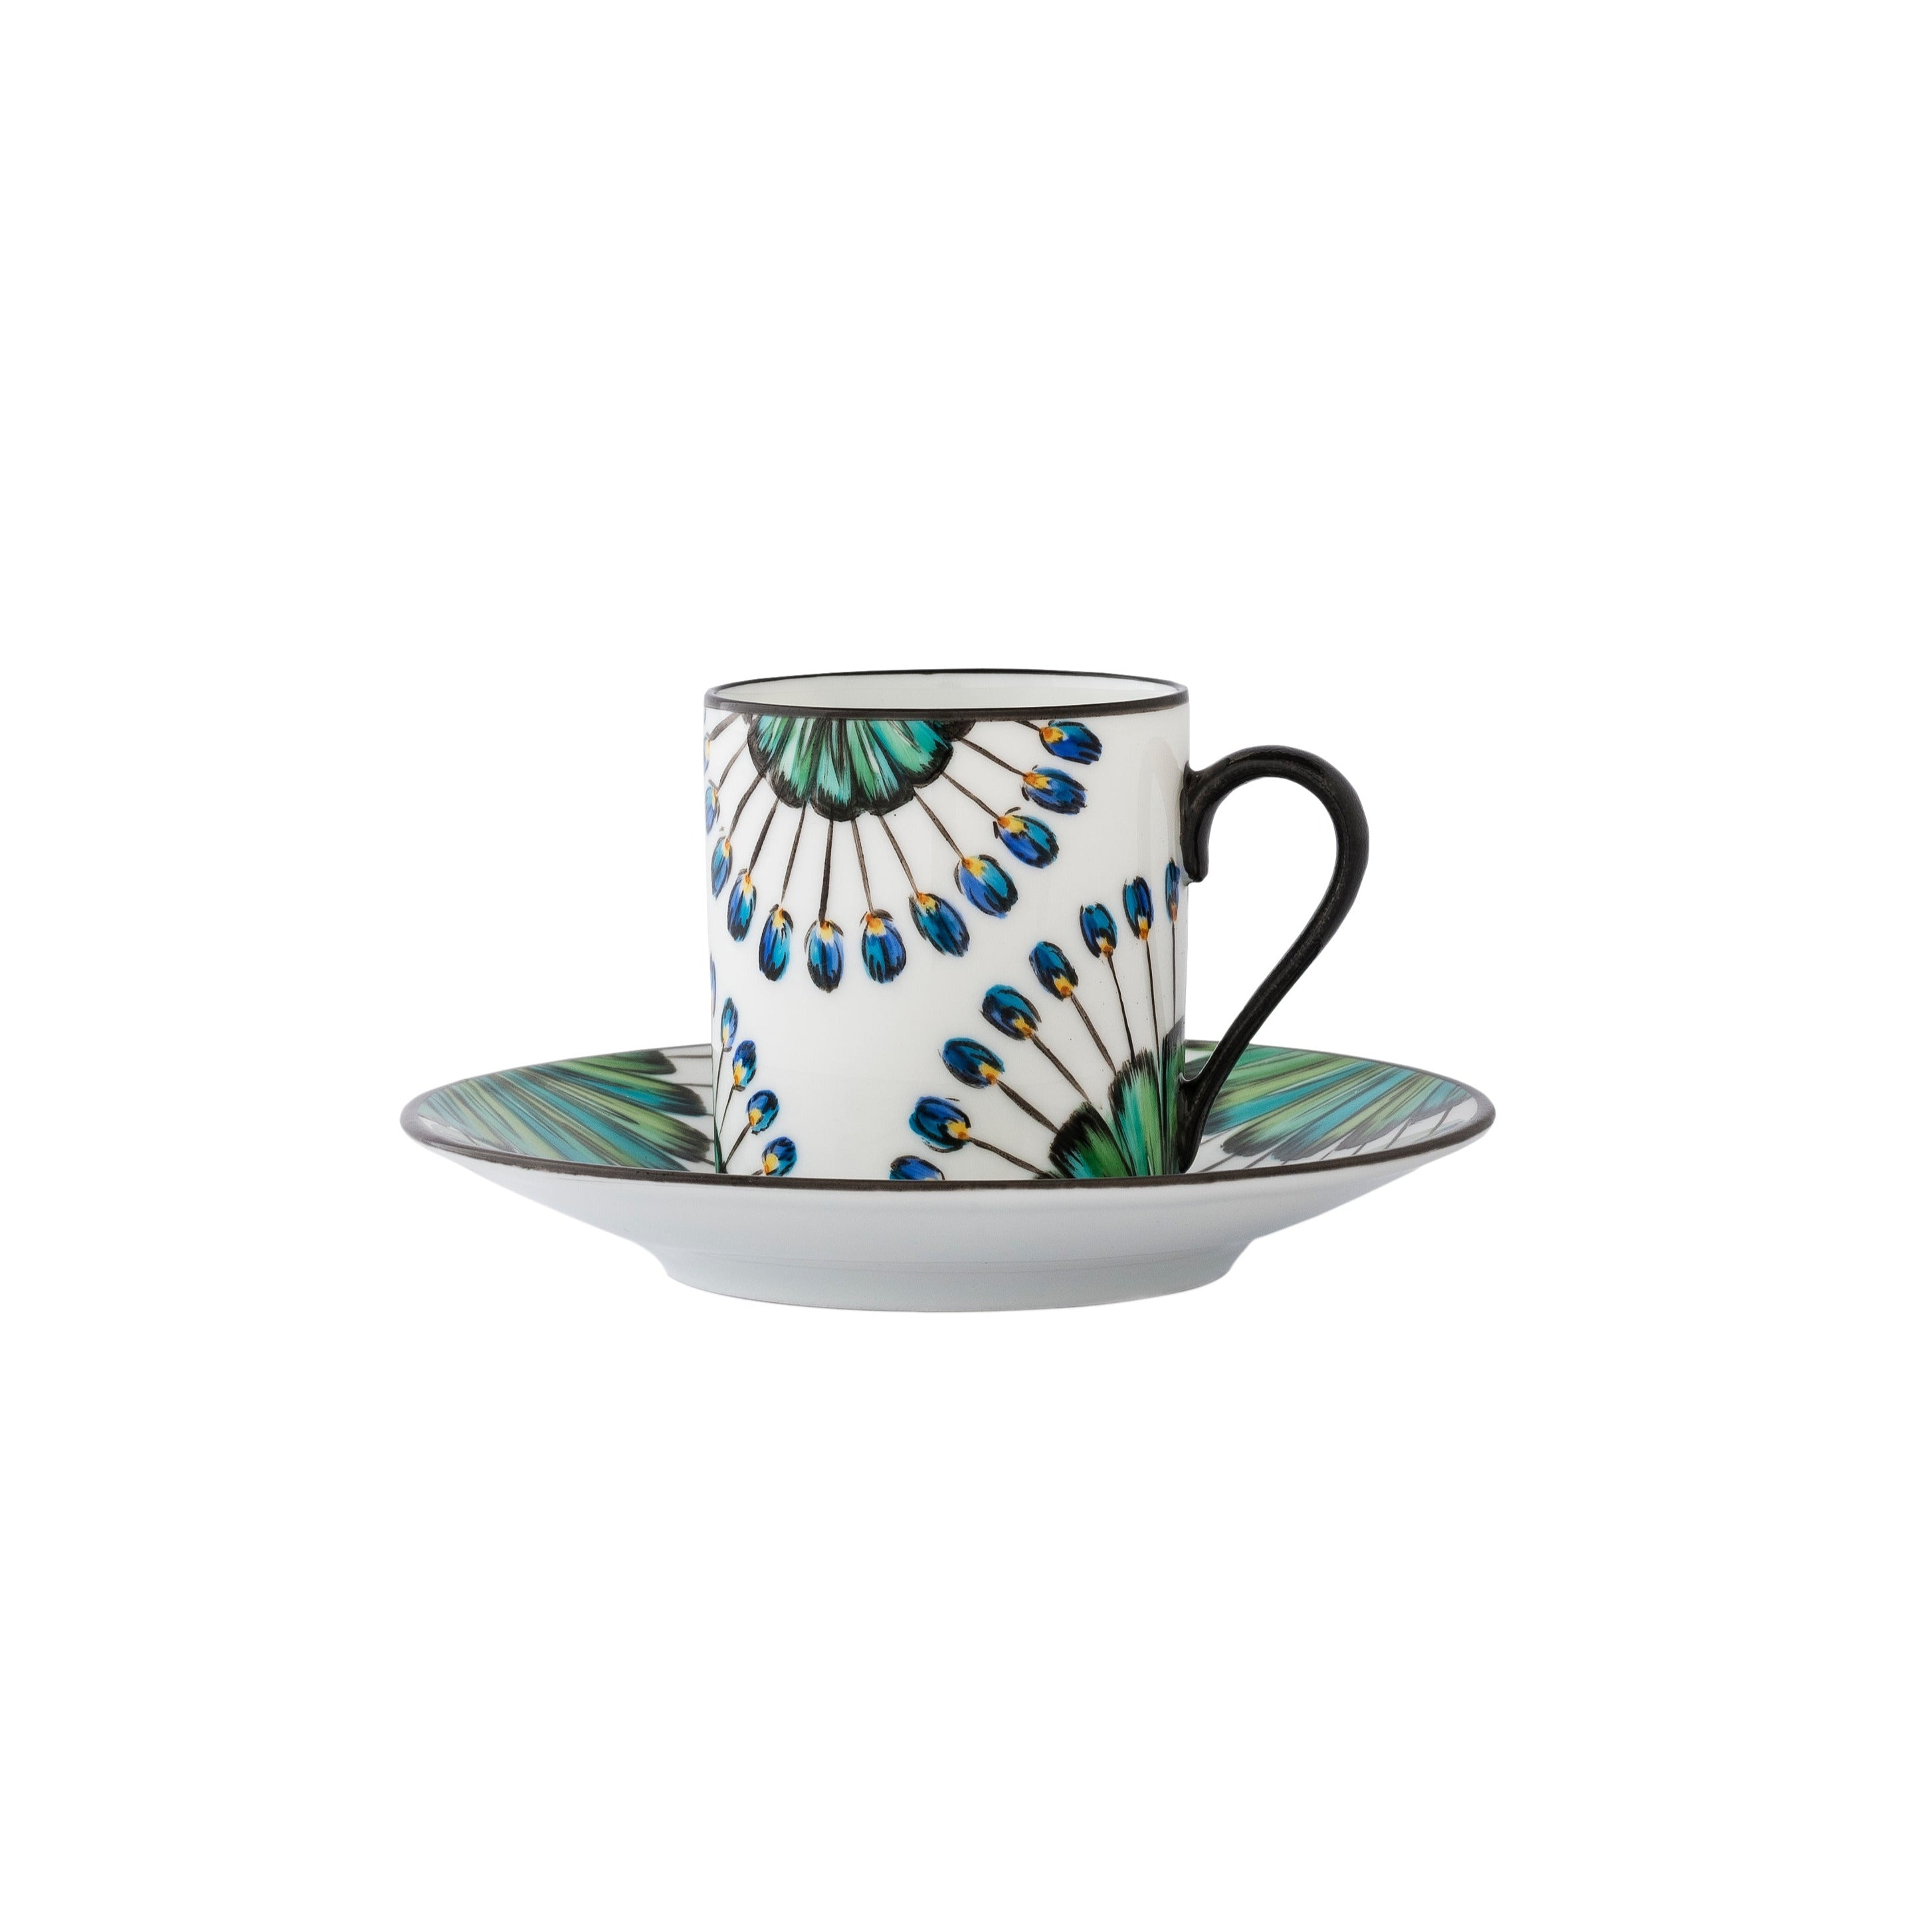 Bahia - Coffee cup and saucer
